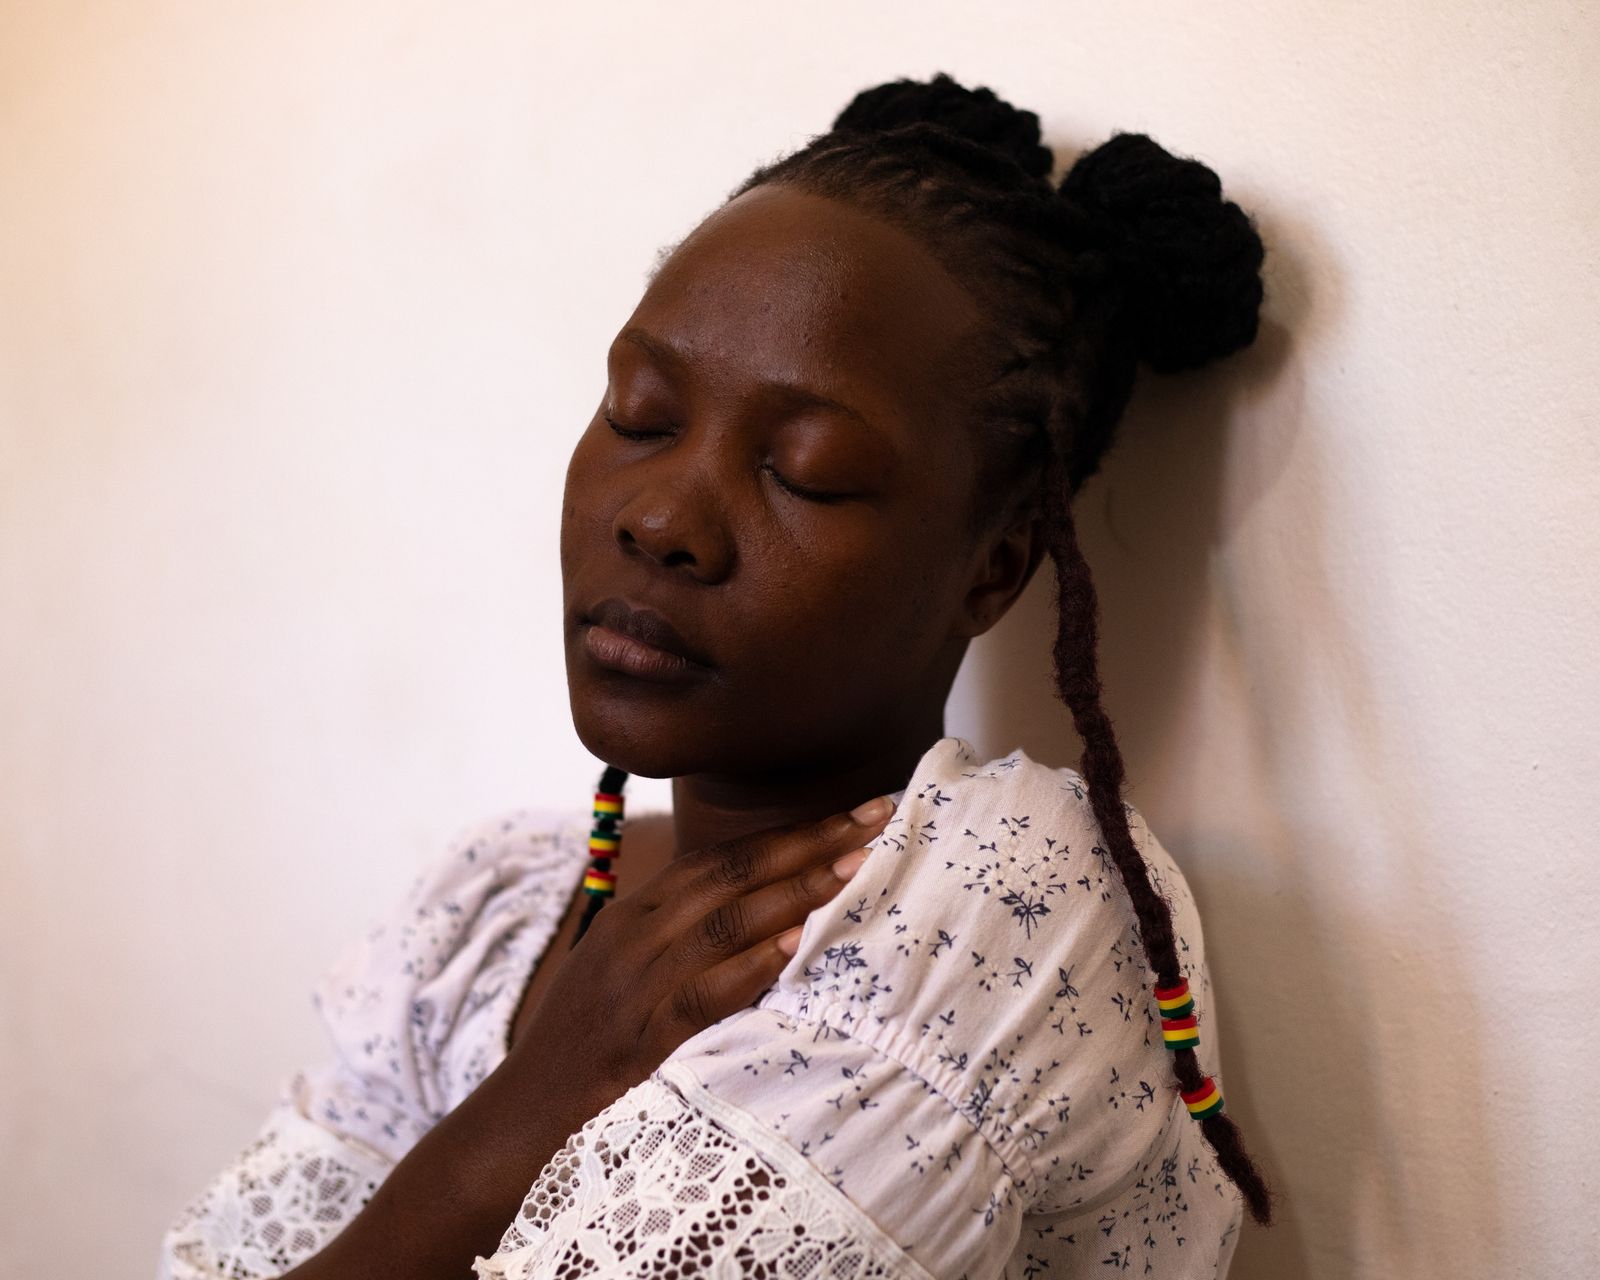 © DeLovie Kwagala - Image from the Surviving Bery: A Girlhood Trauma photography project